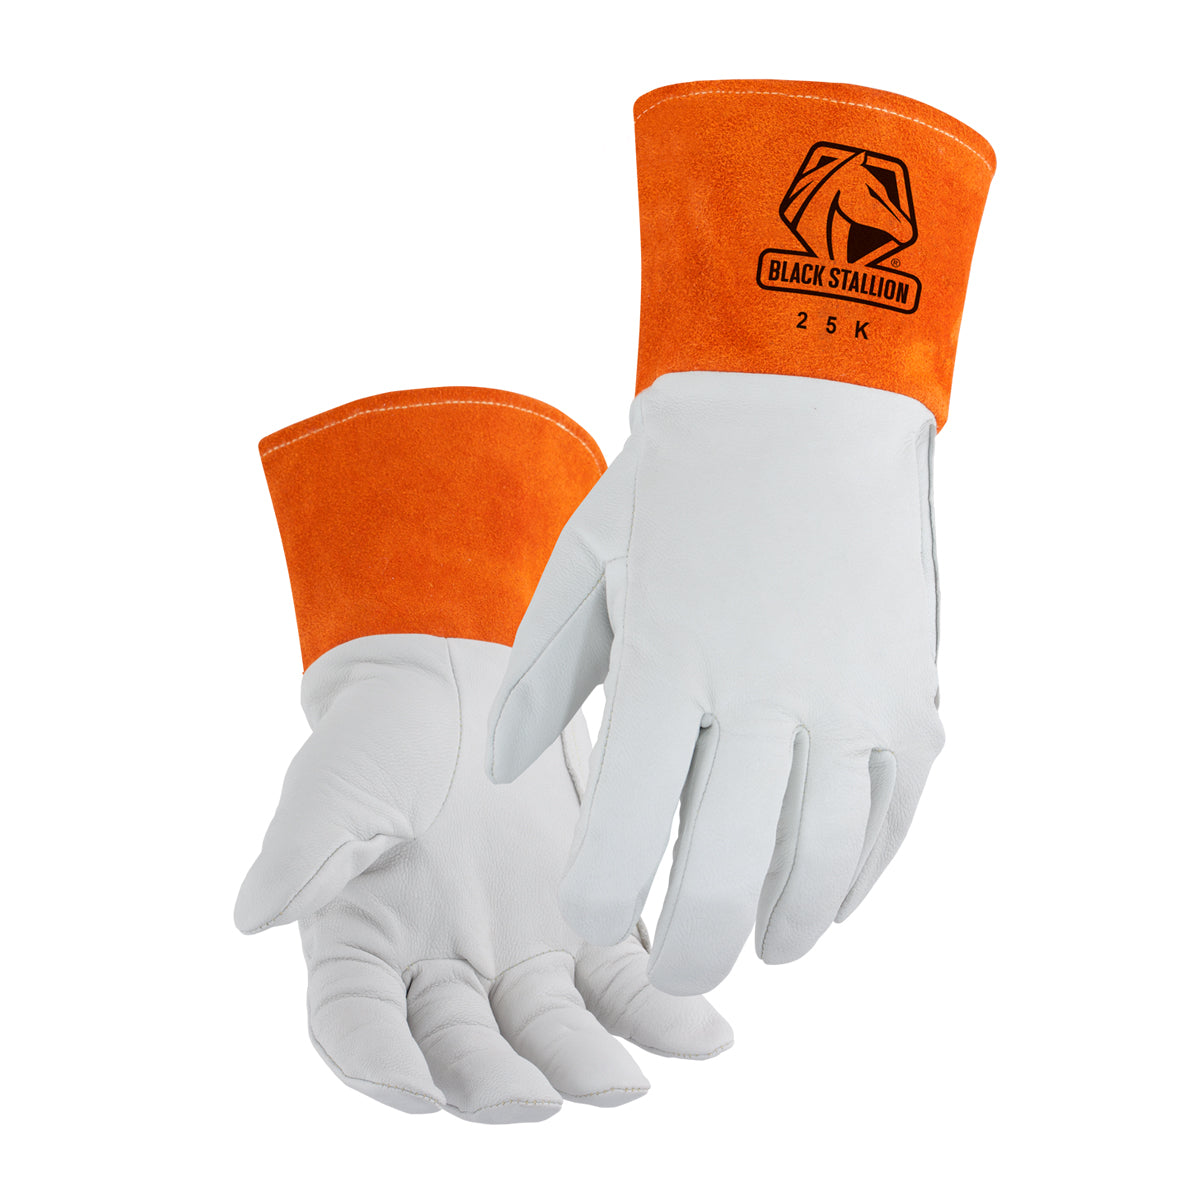 Grain Kidskin - Long Cuff Tig Welding Gloves - 25K